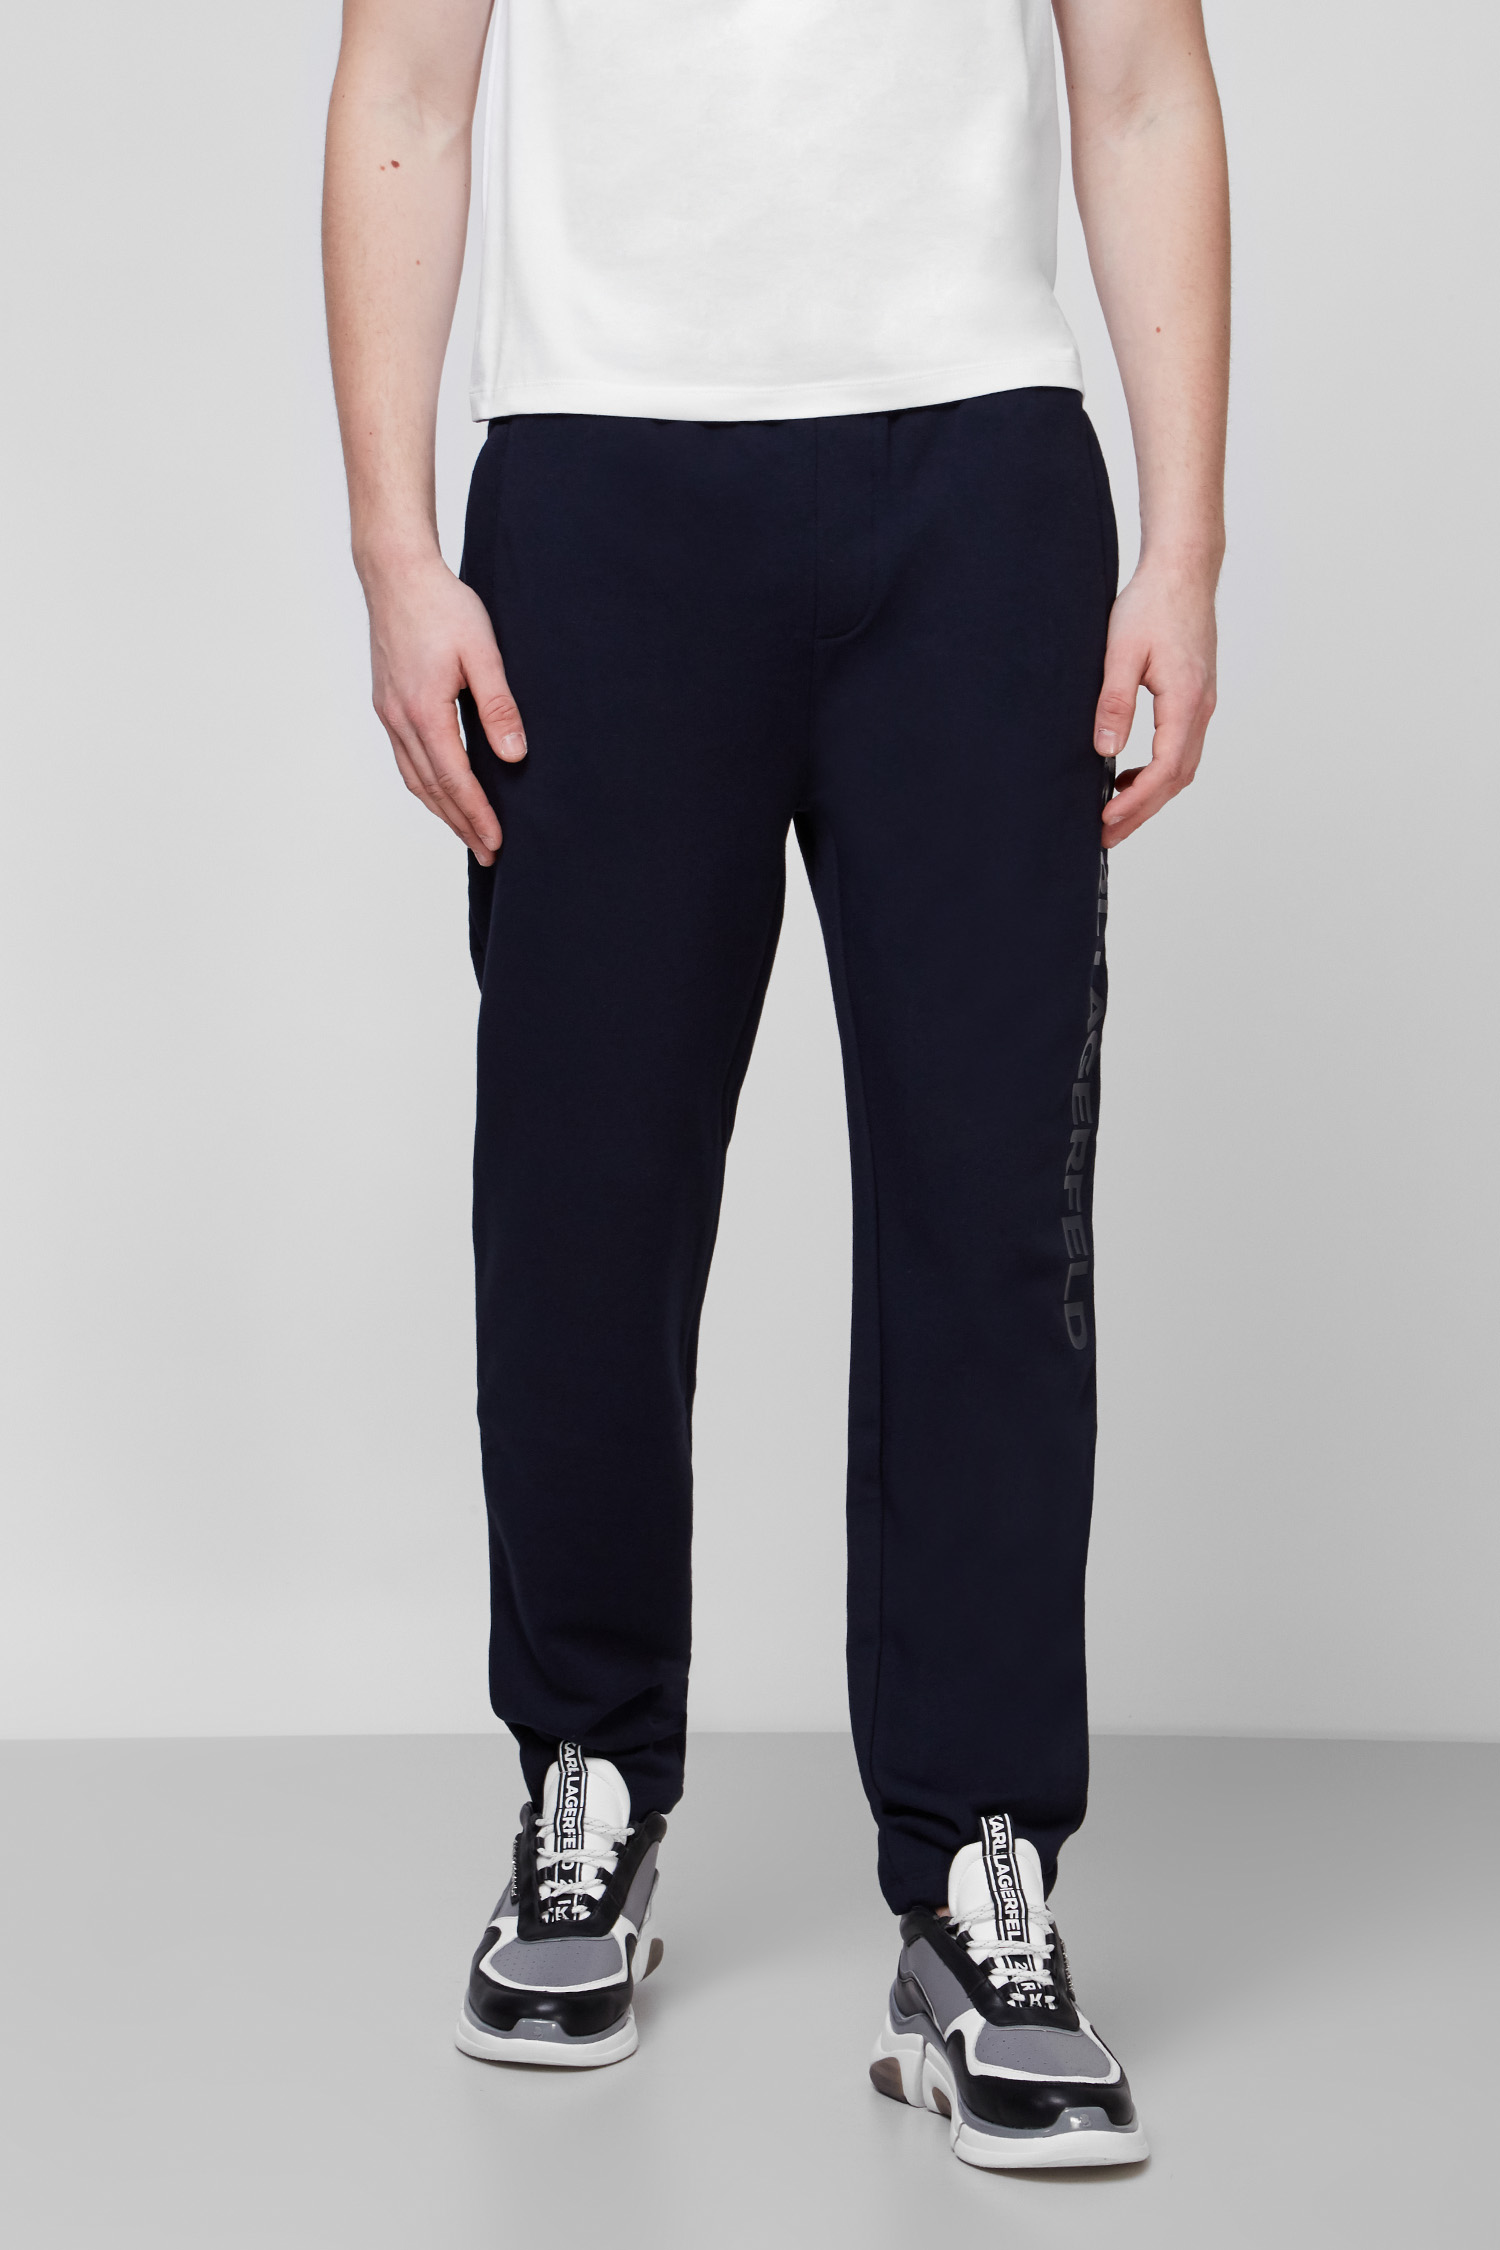 Темно-синие спортивные брюки для парней Karl Lagerfeld 511900.705013;690